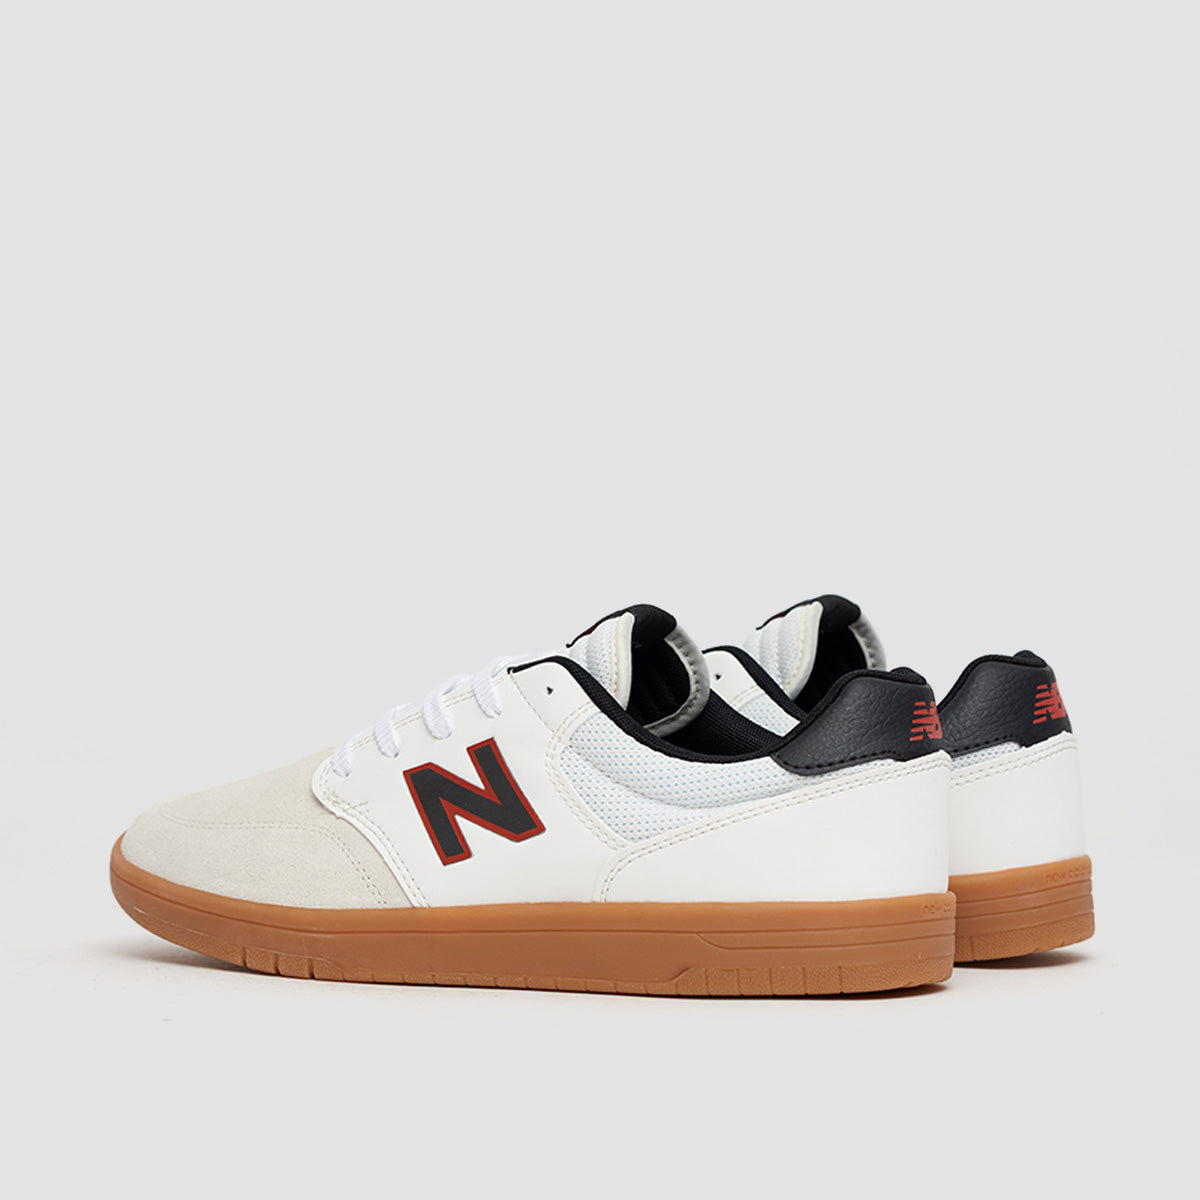 New Balance Numeric 425 Shoes - Sea Salt/Black